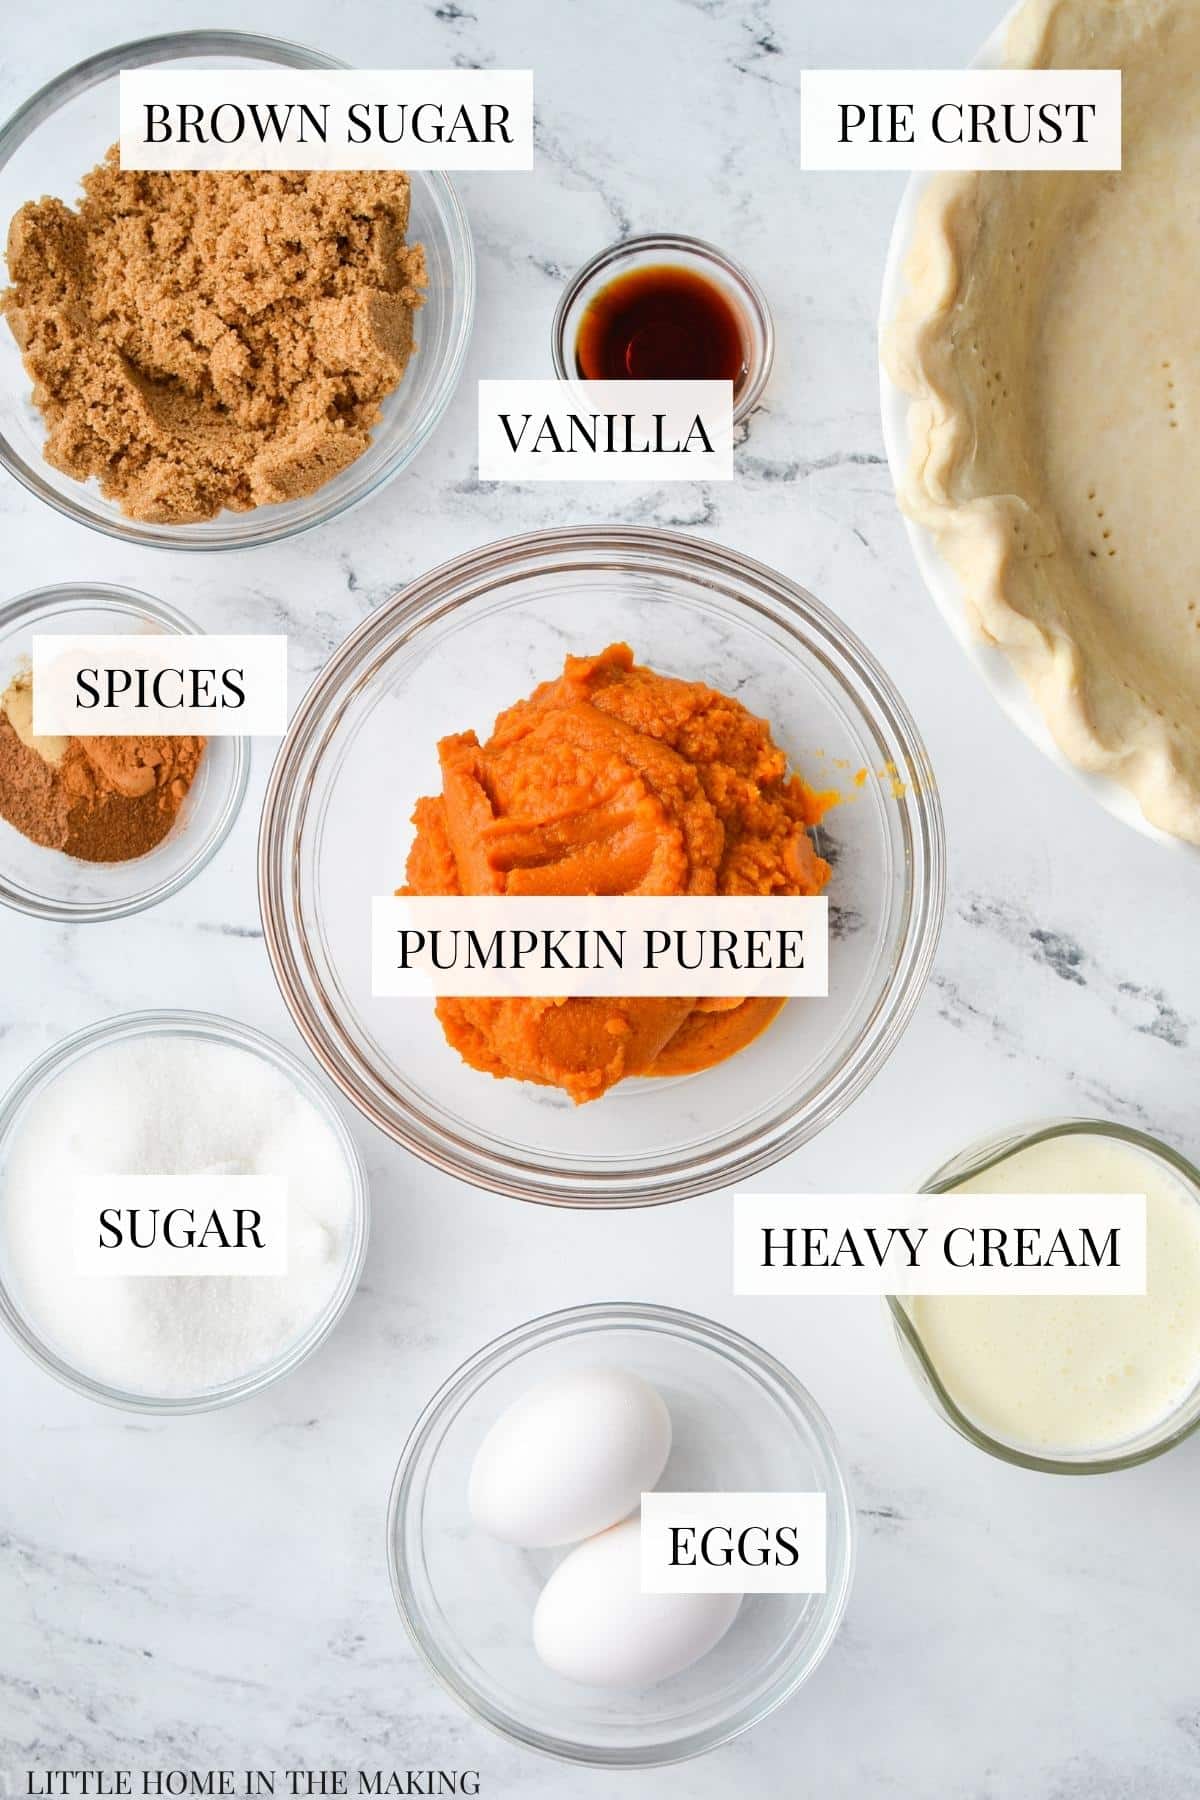 The ingredients needed to make a pumpkin custard pie, including pumpkin puree, pie crust, and sugar.